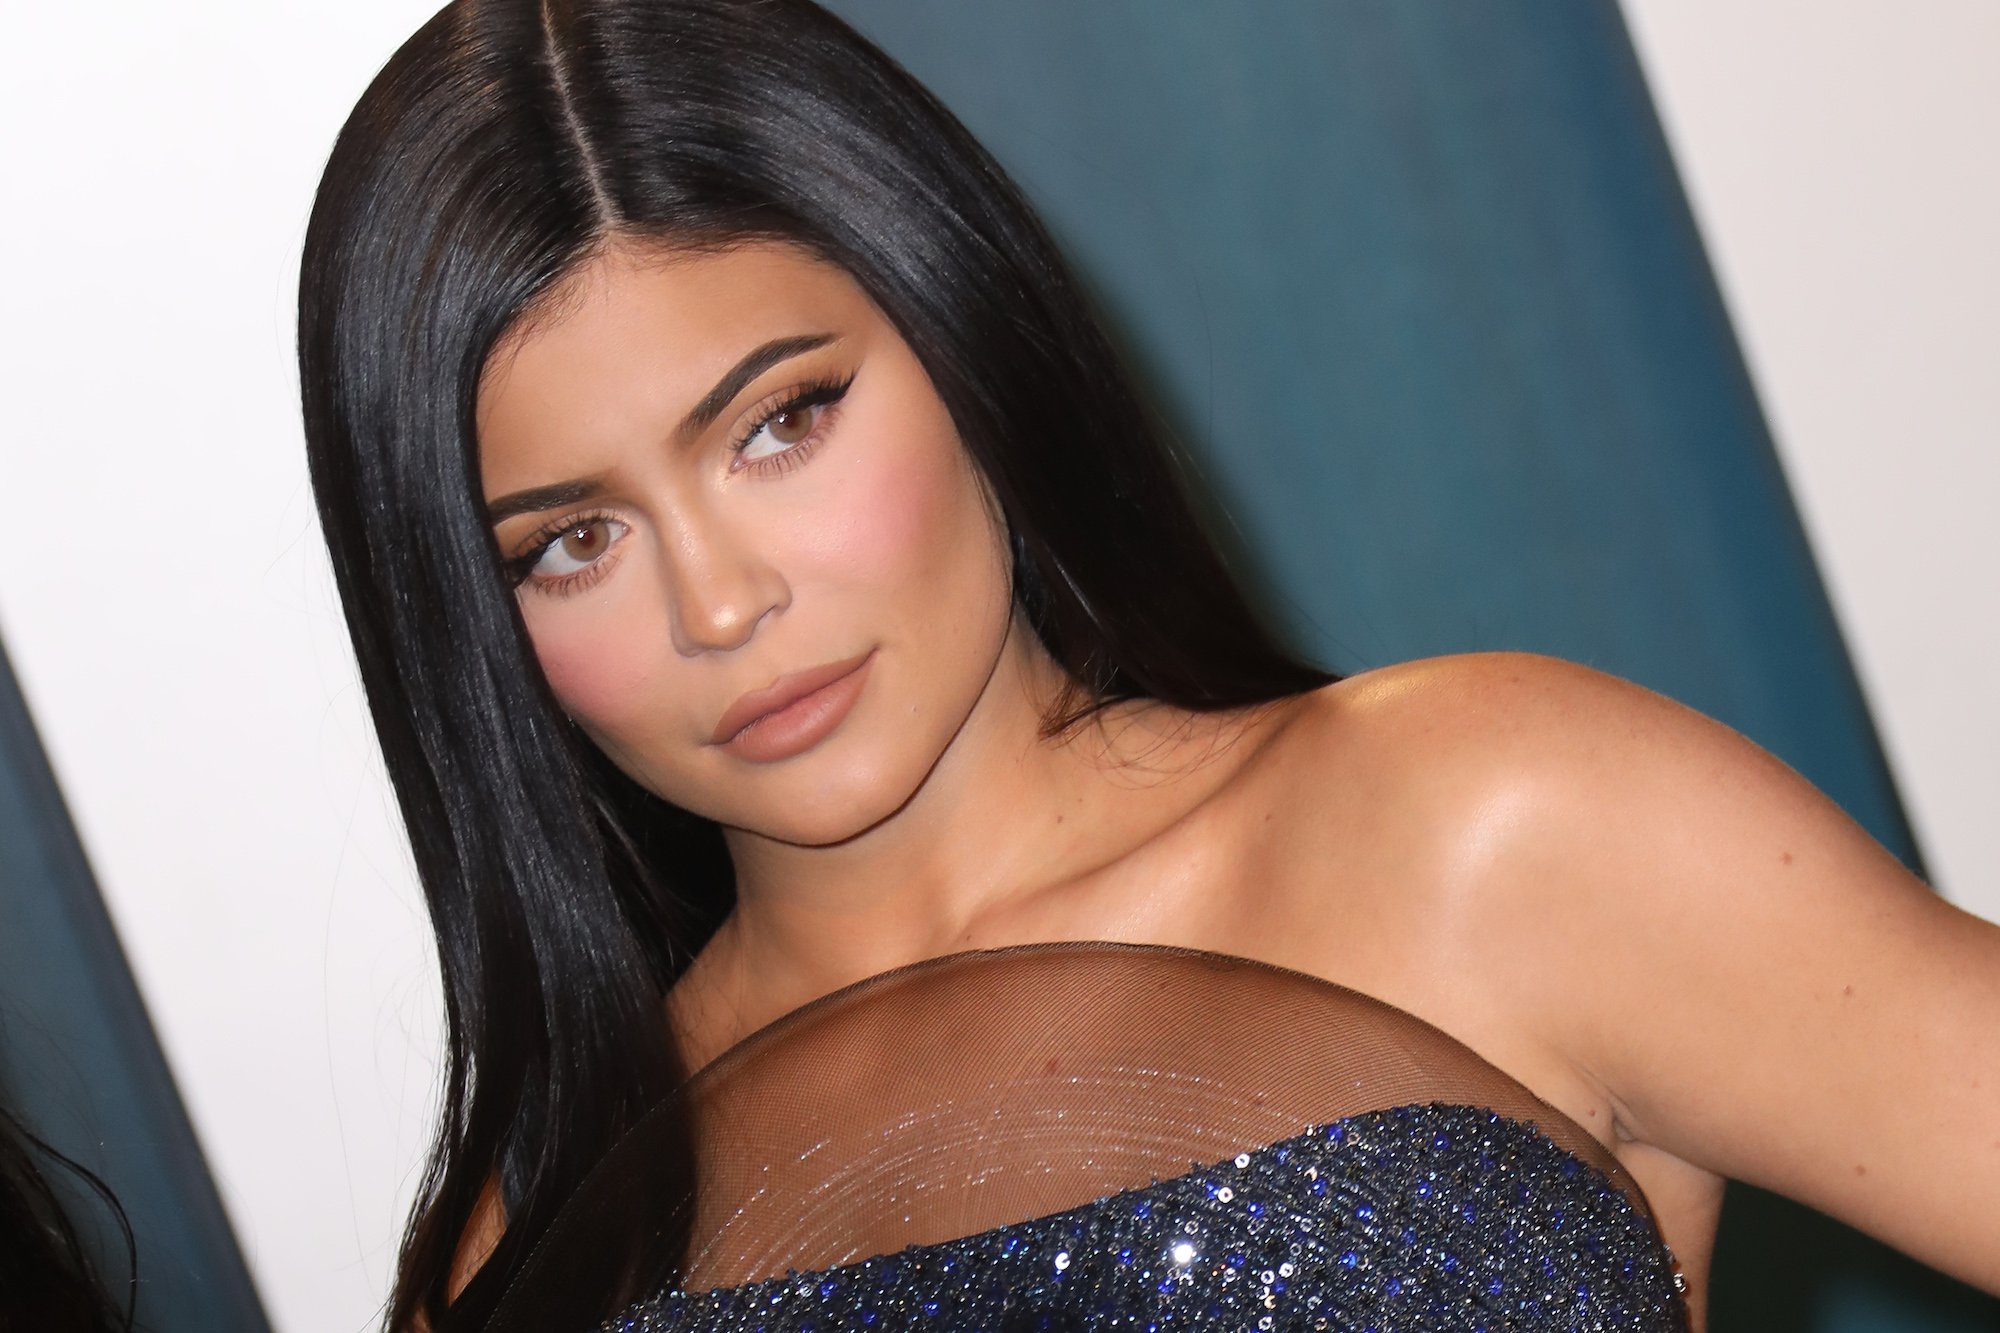 Kylie Jenner attending the 2020 Vanity Fair Oscar Party